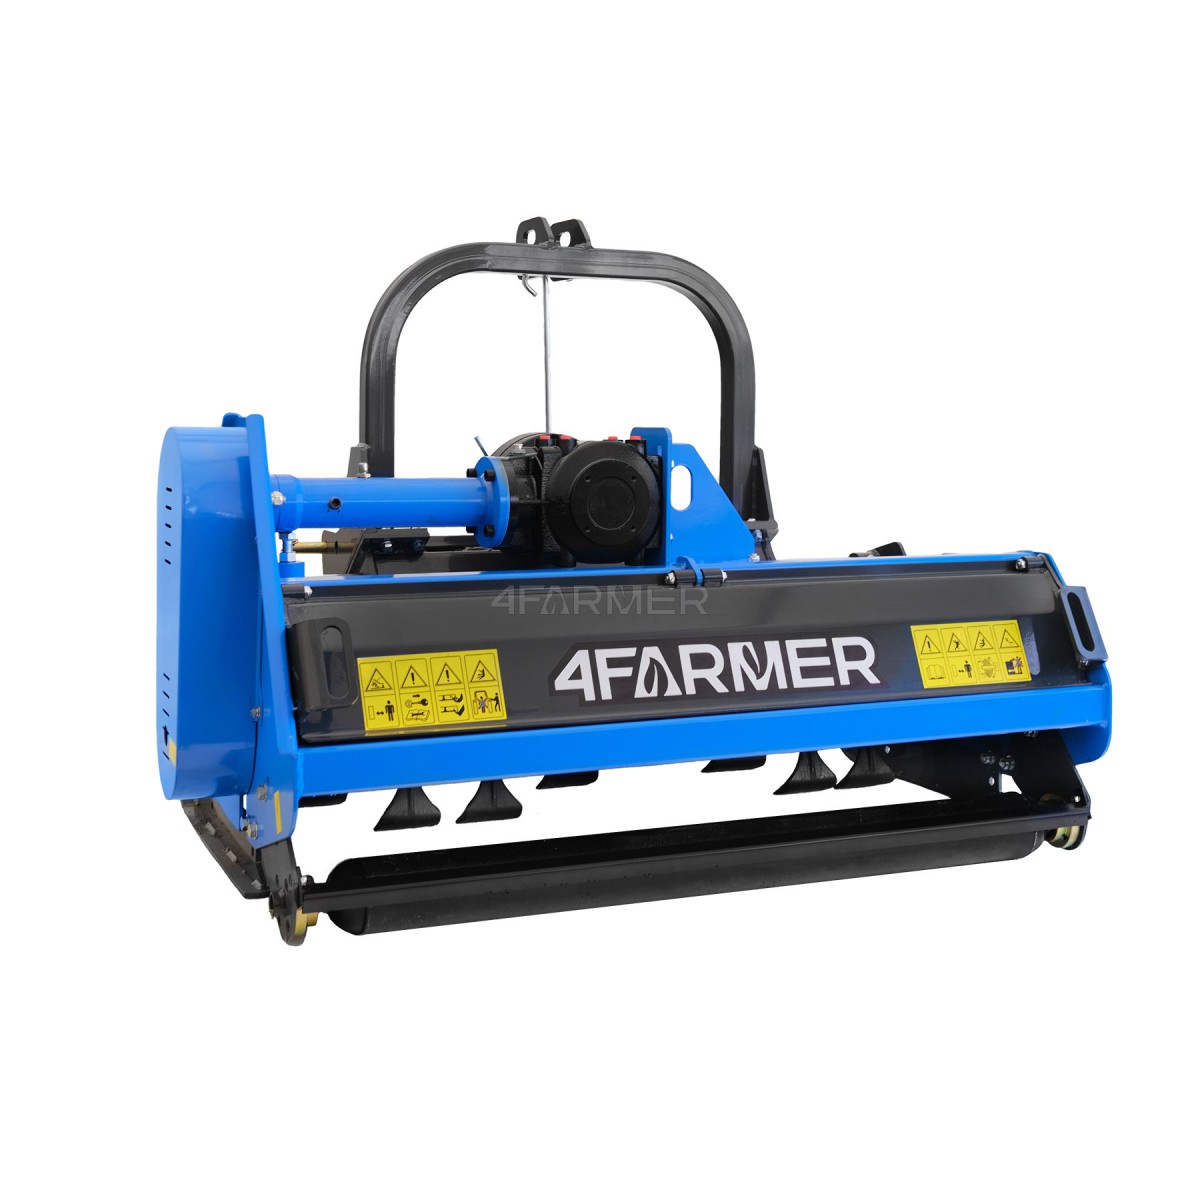 EFGCH 155D 4FARMER flail mower - blue